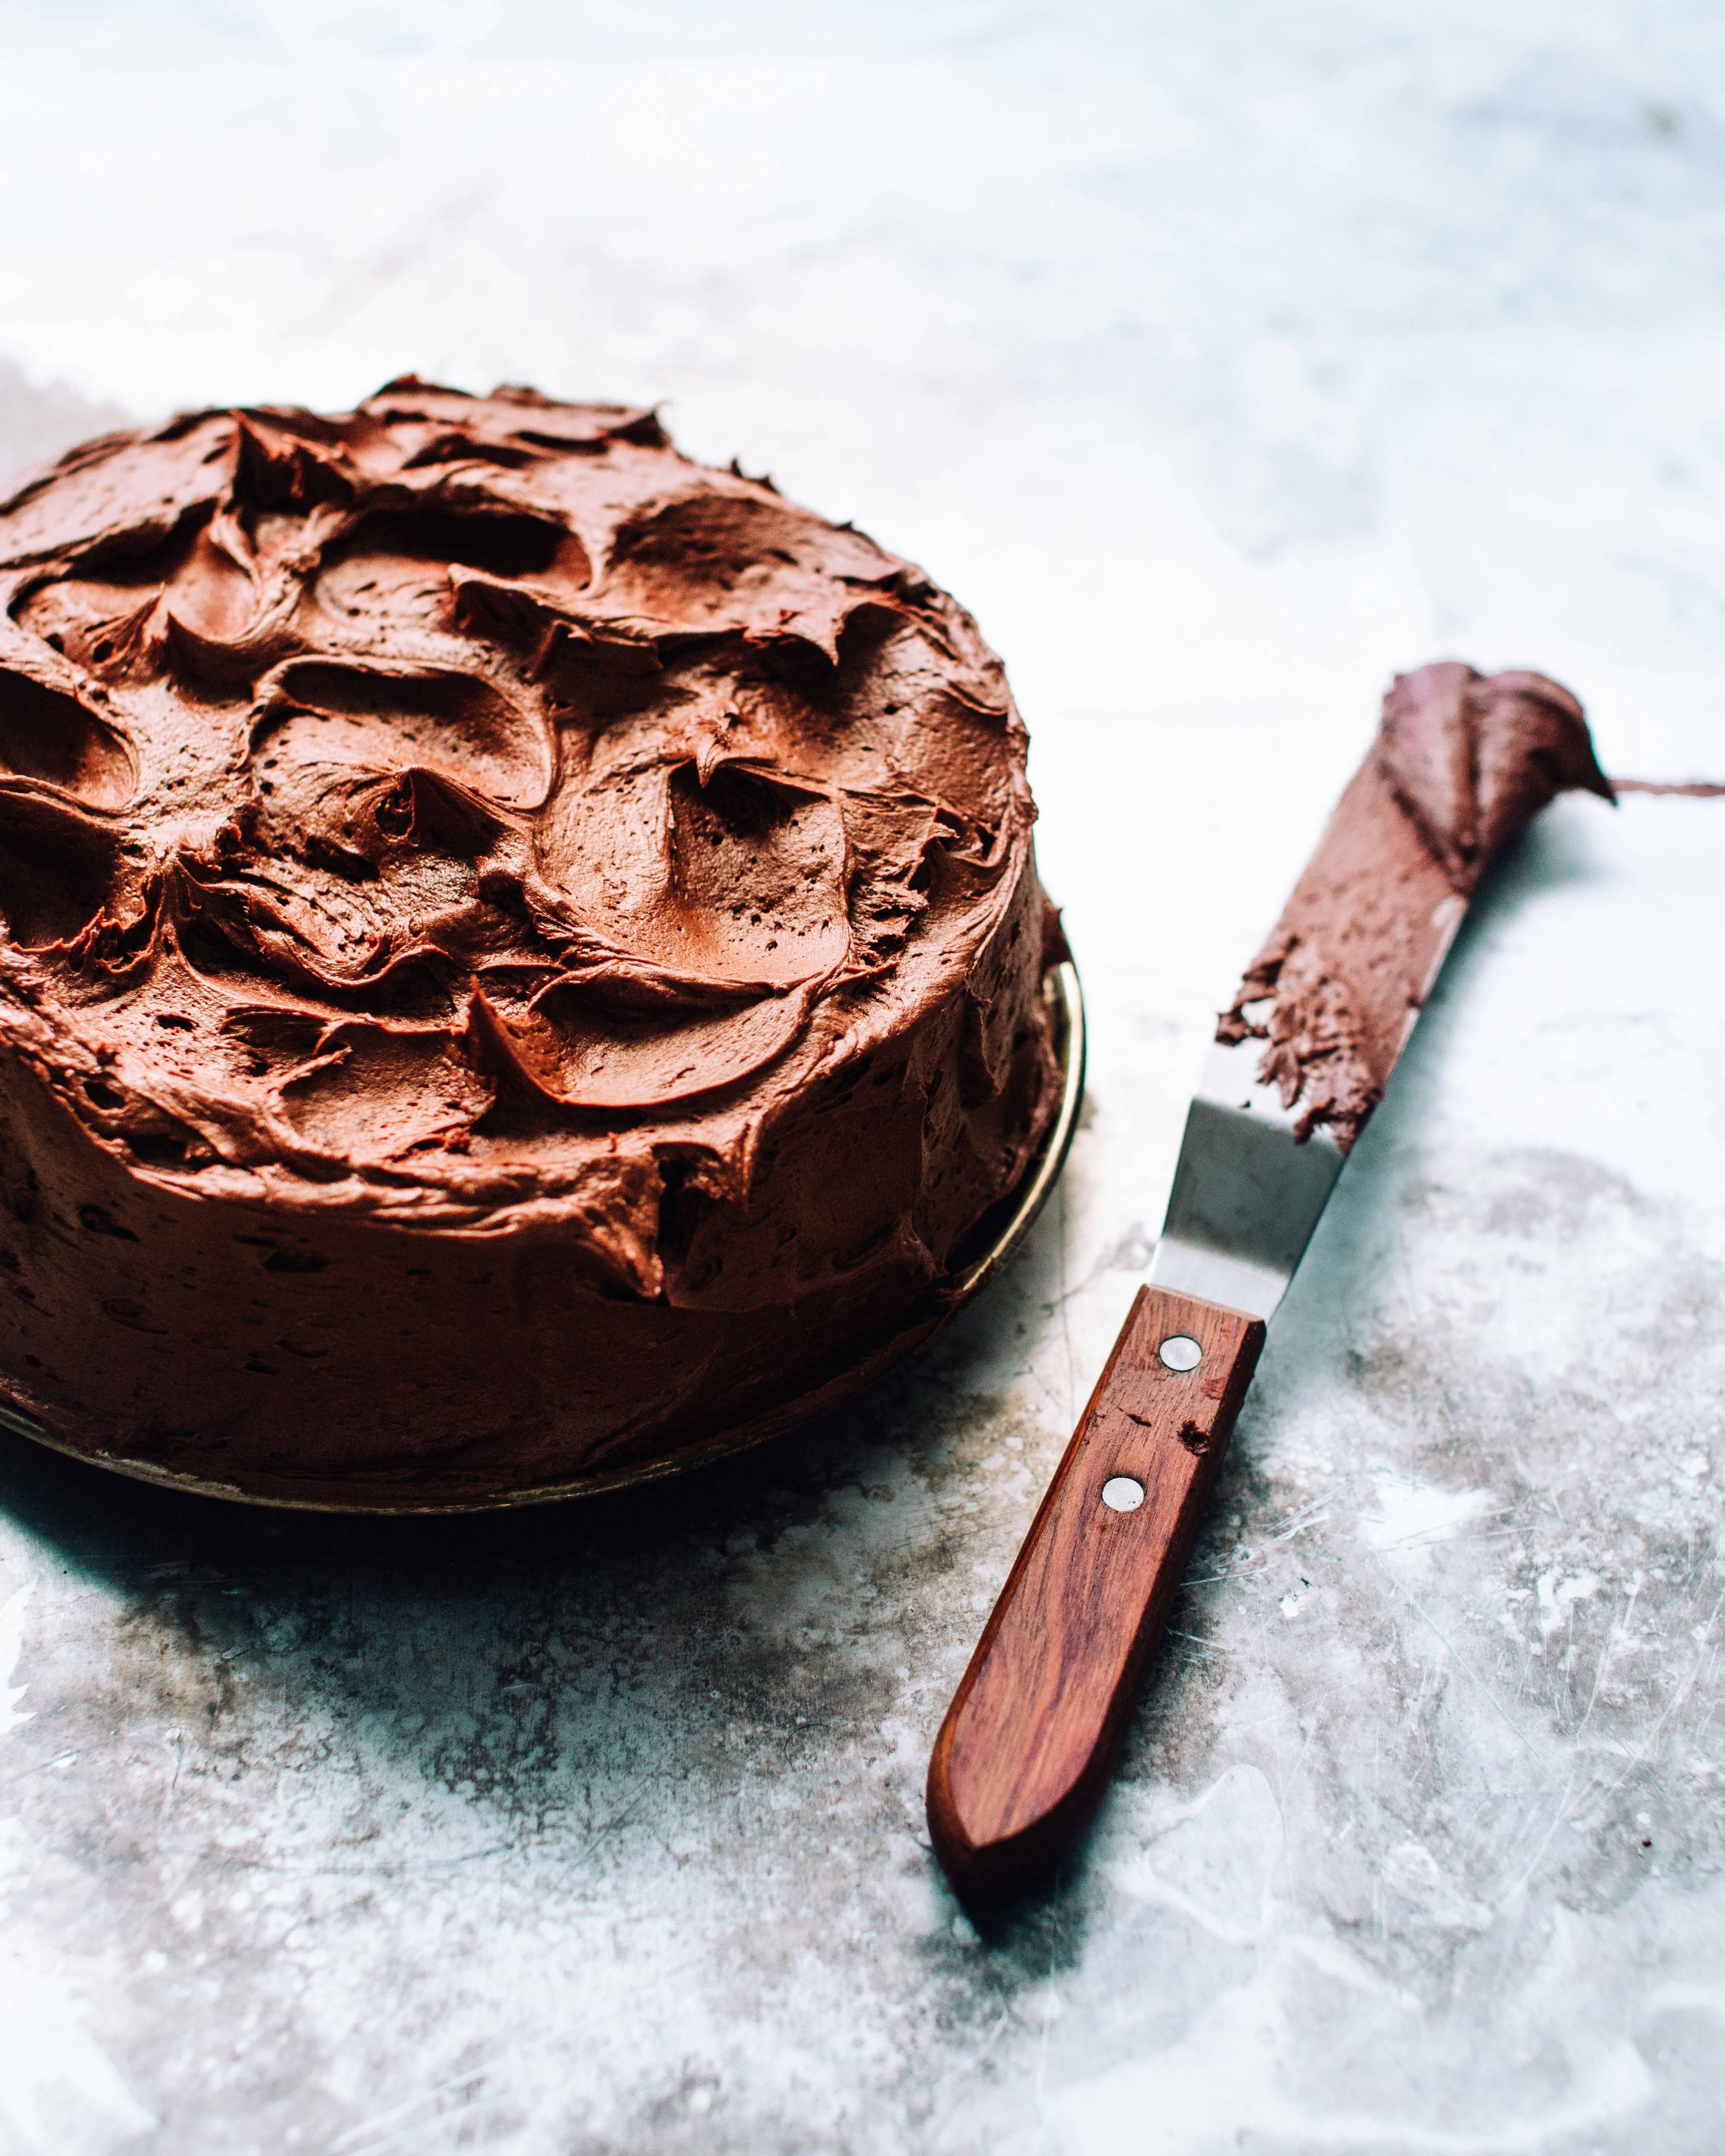 Baking a Chocolate Cake